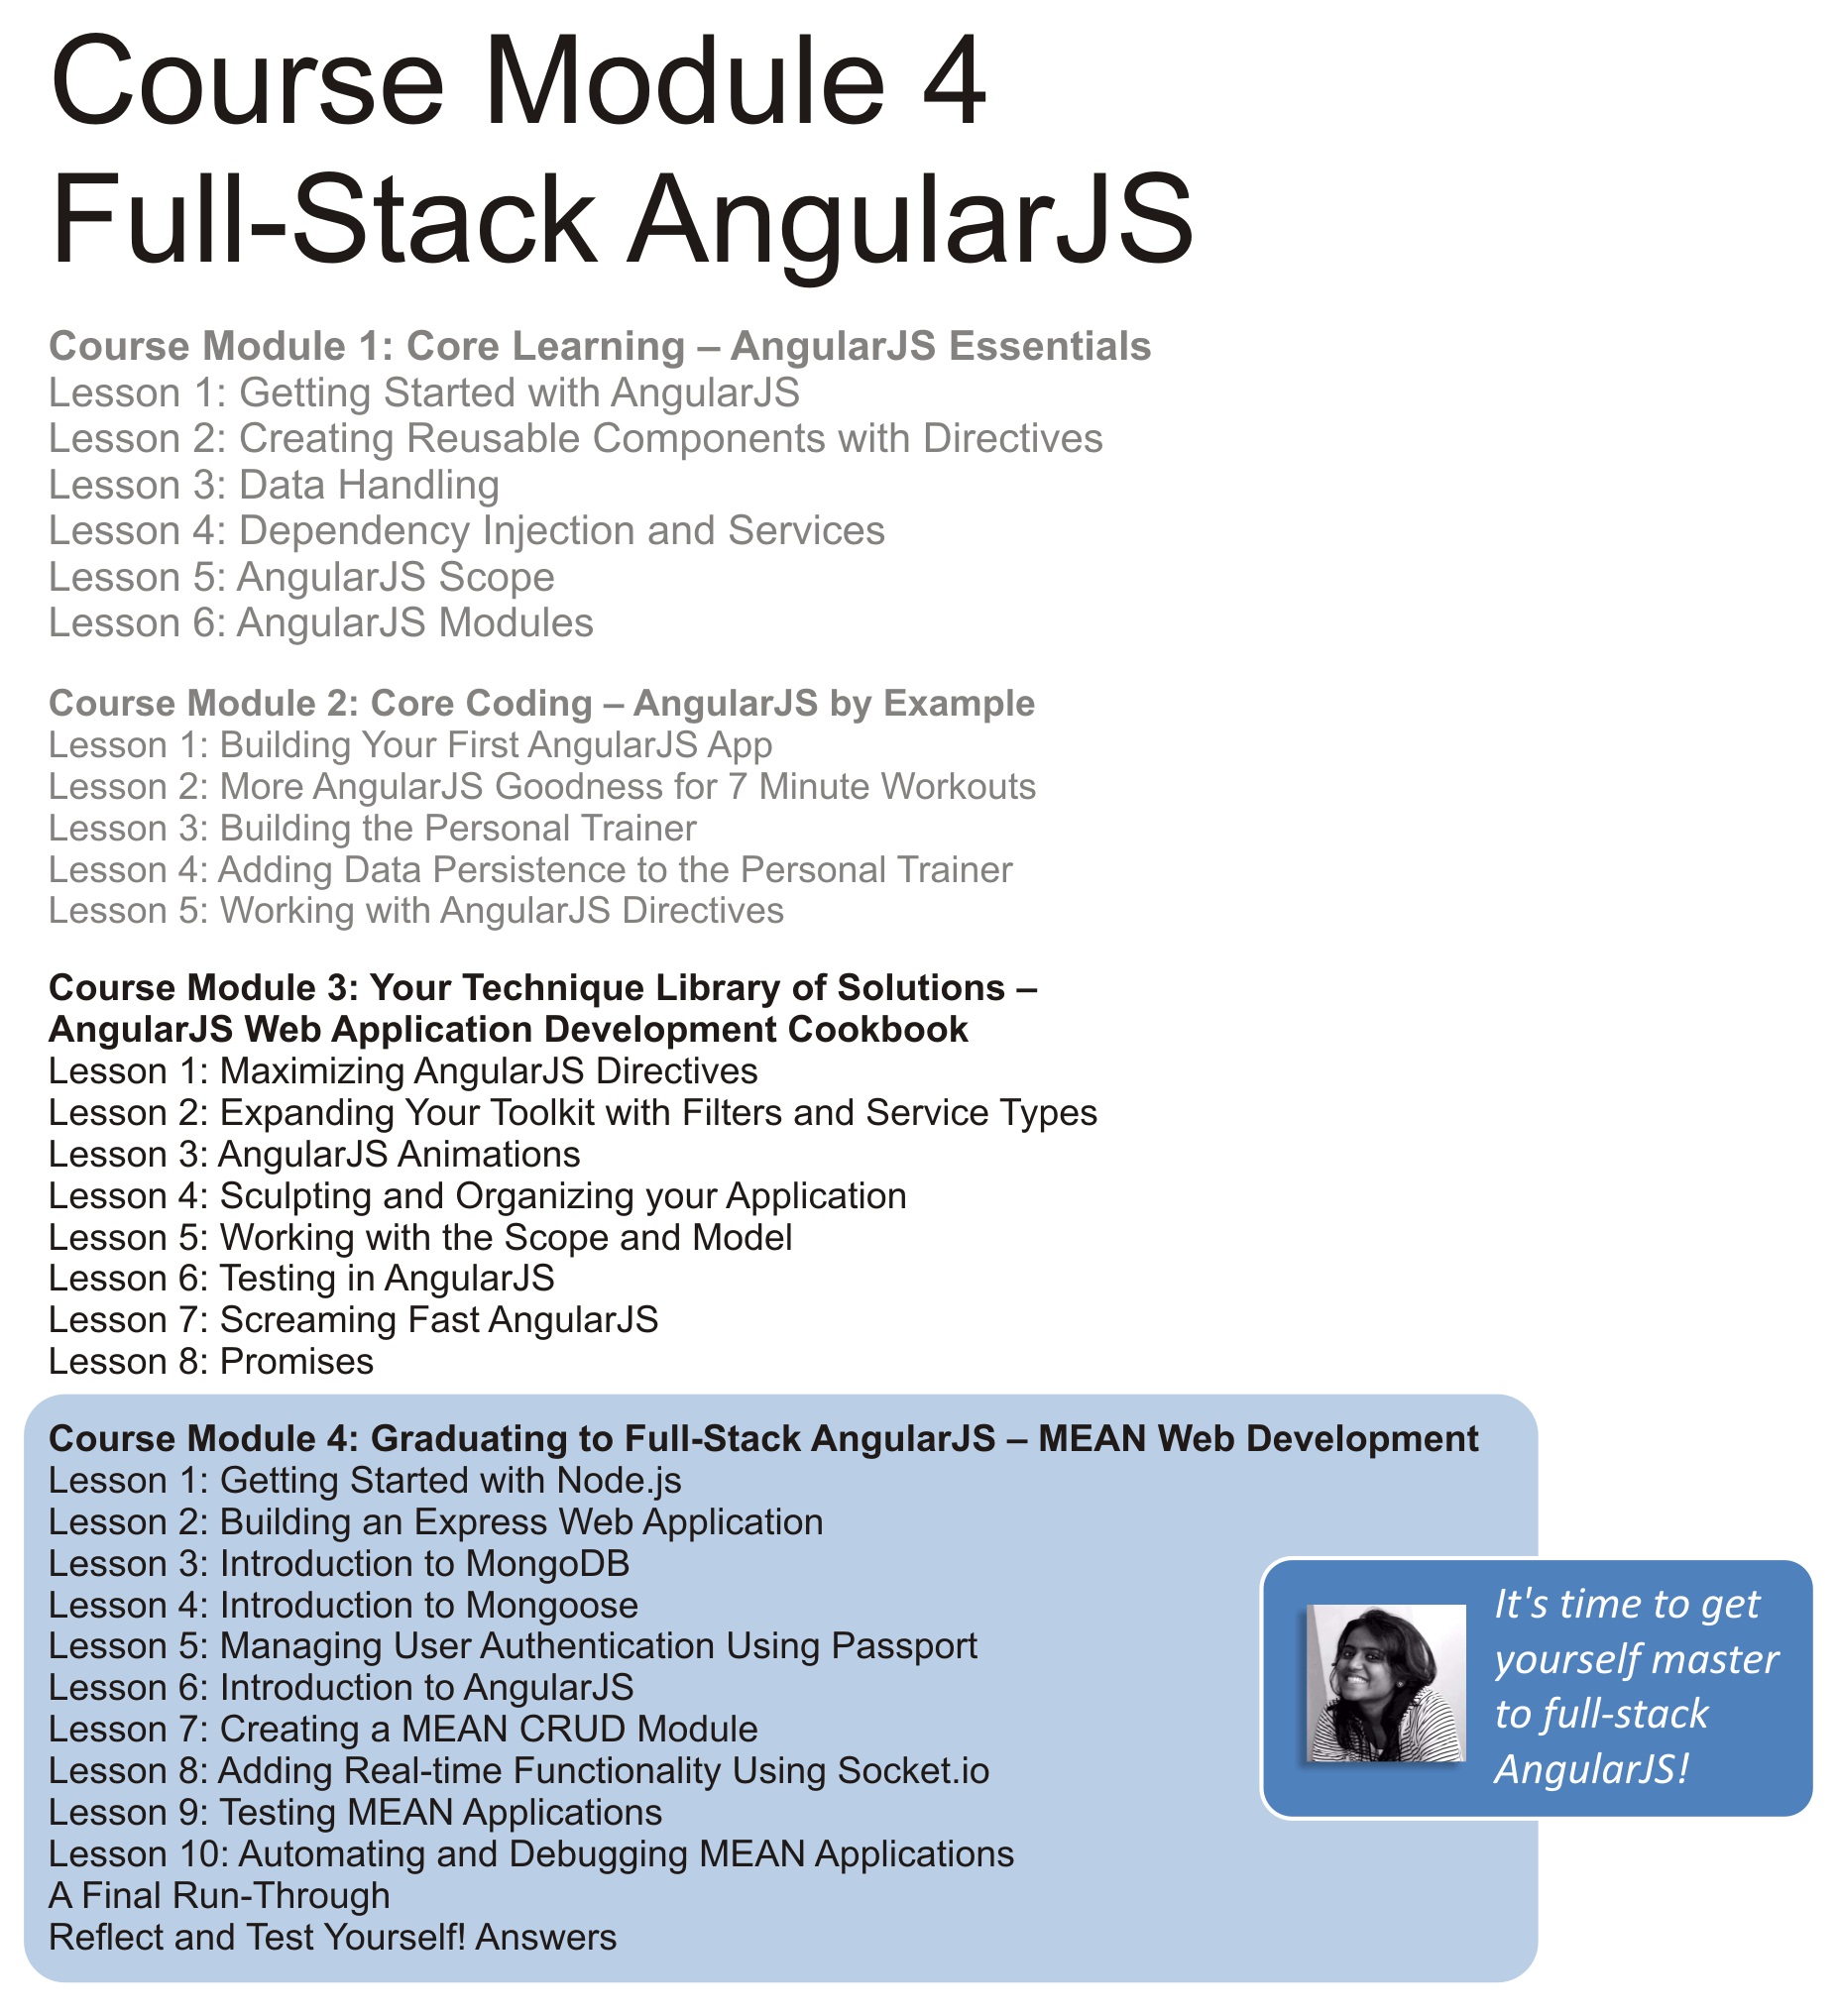 Full-Stack AngularJS – MEAN Web Development